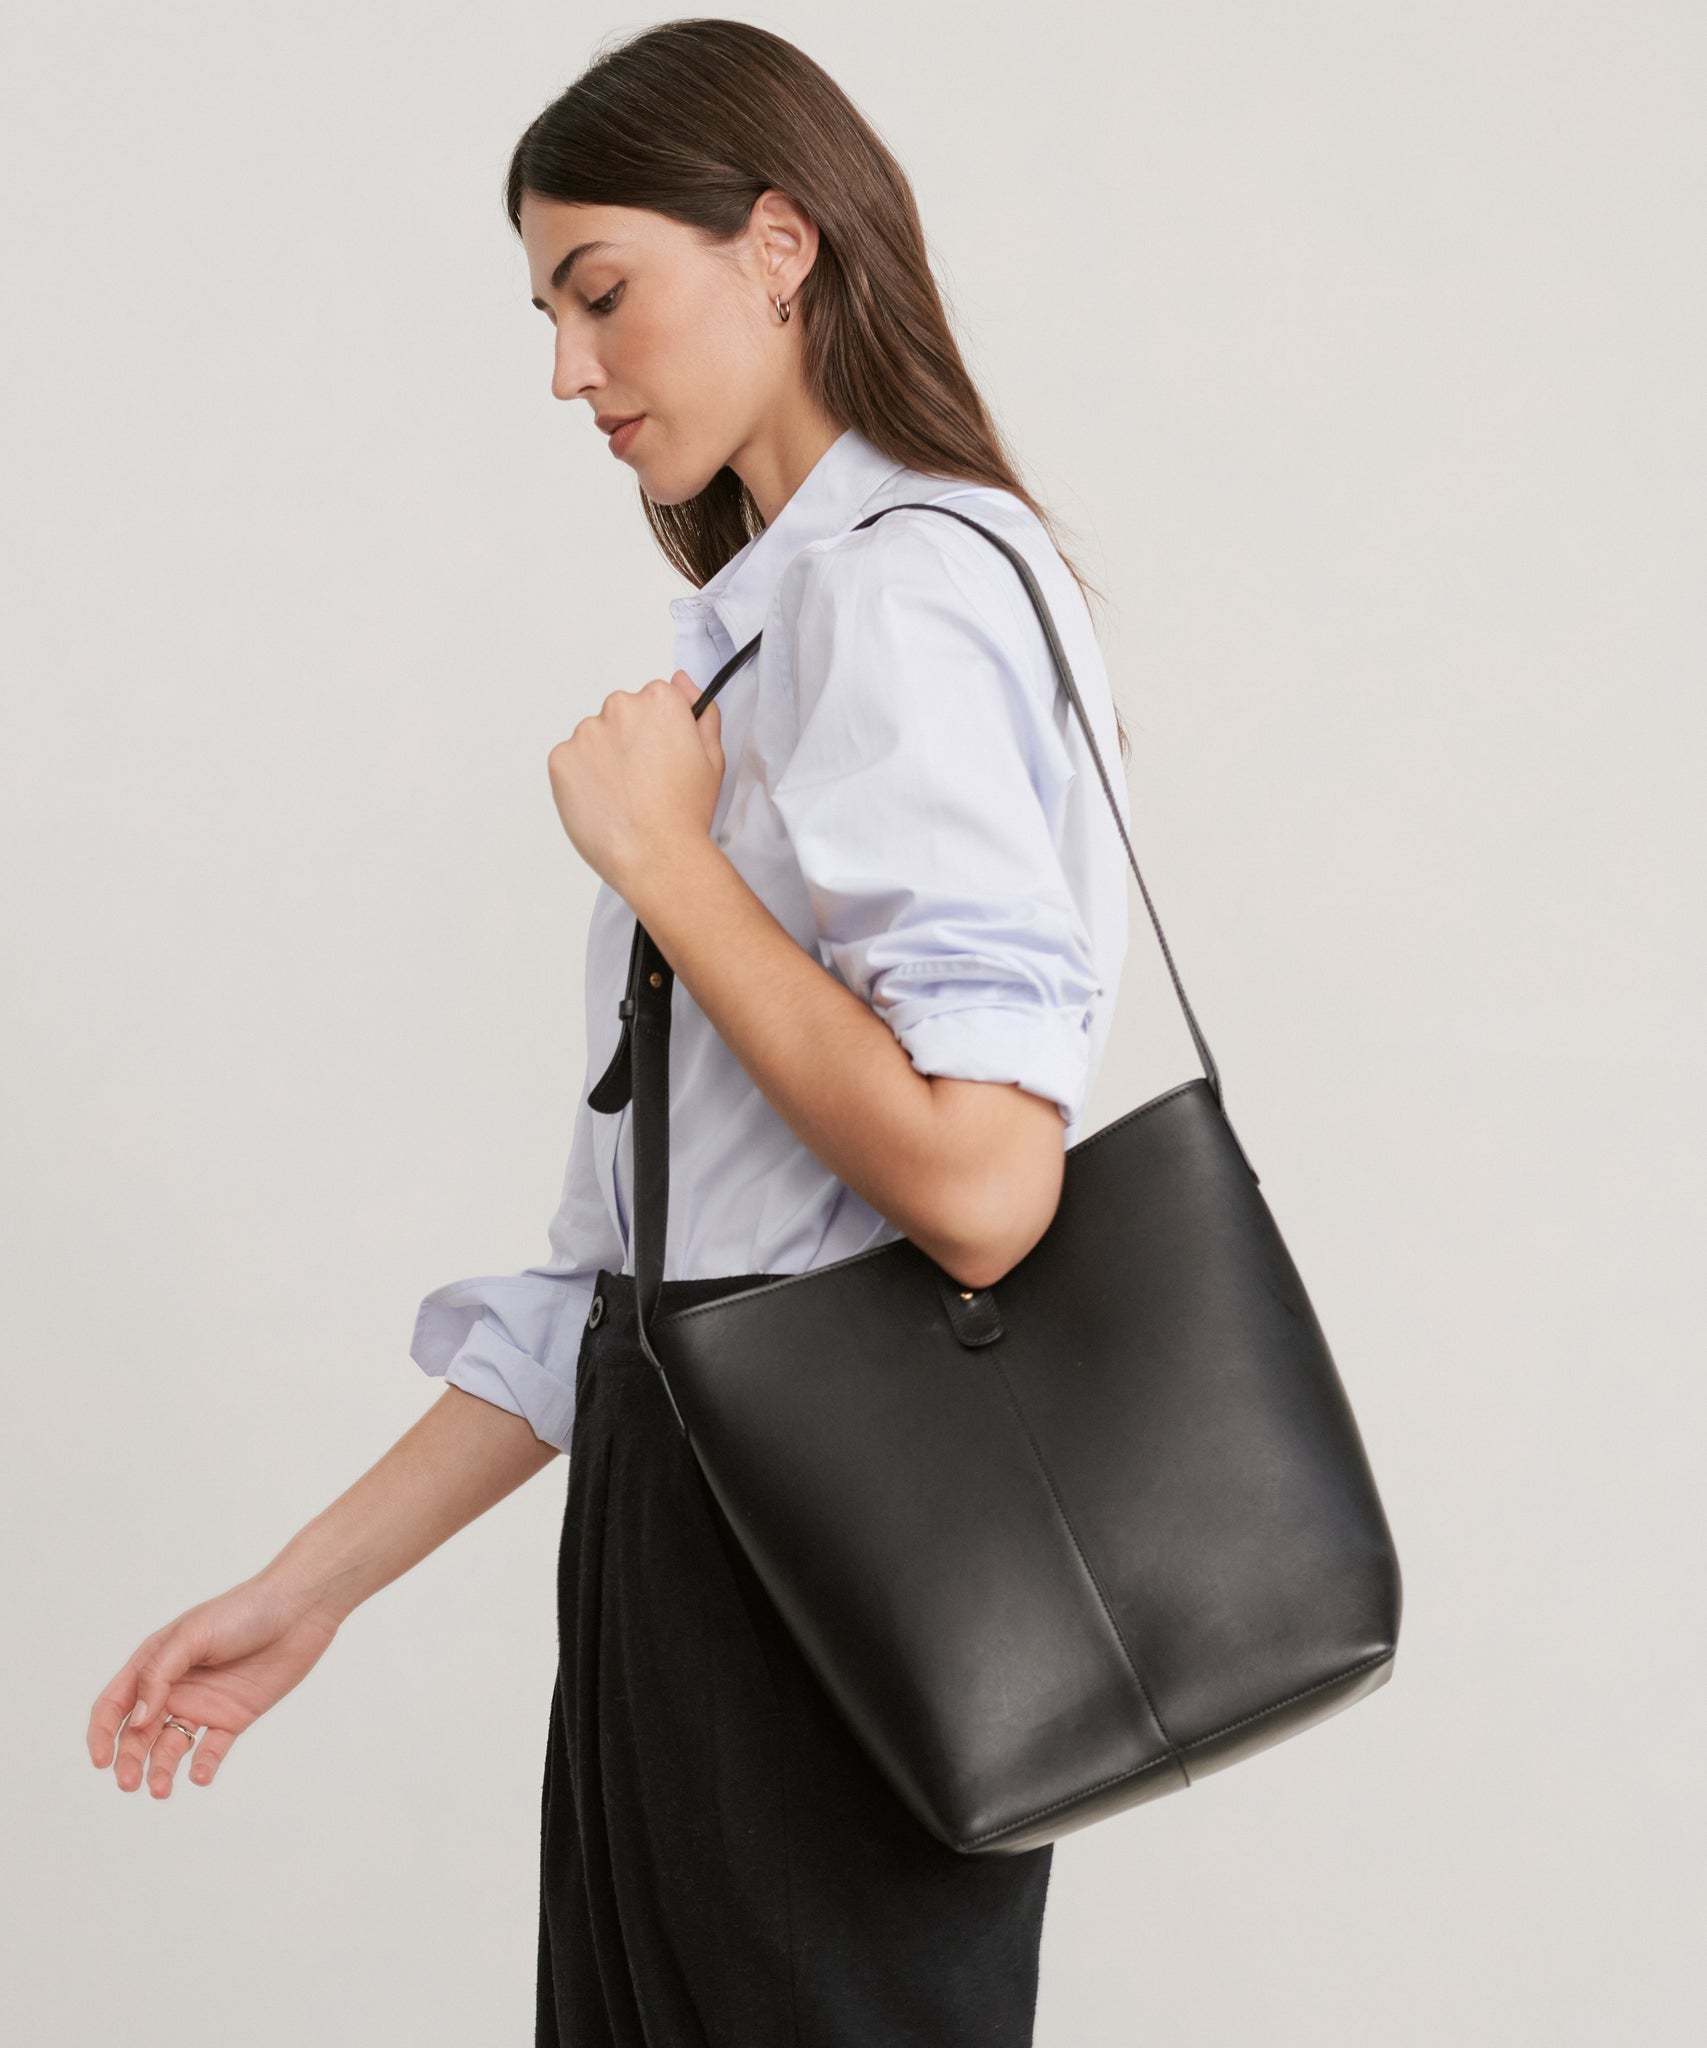 Leather Bucket Bag – Jenni Kayne